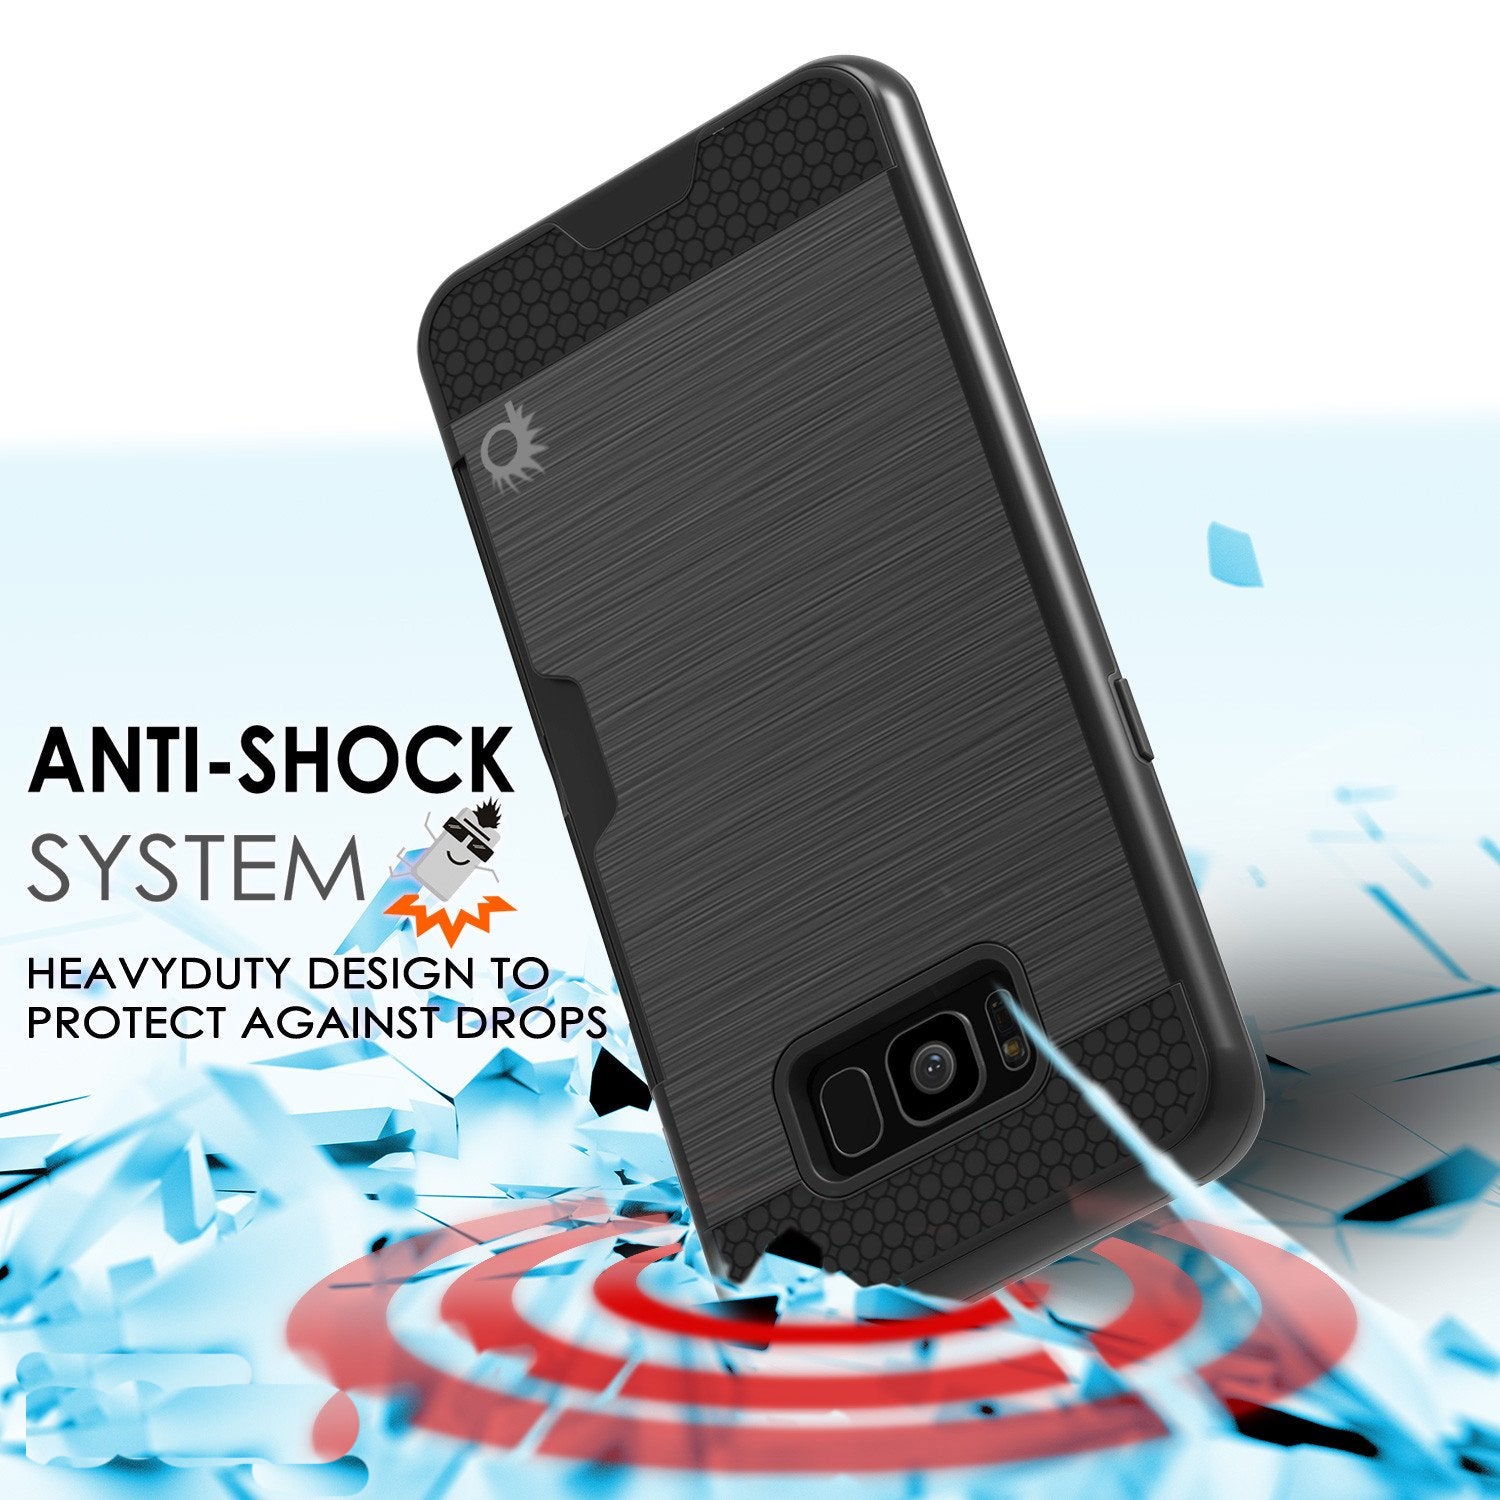 Galaxy S8 Case PunkCase SLOT Black Series Slim Armor Soft Cover Case